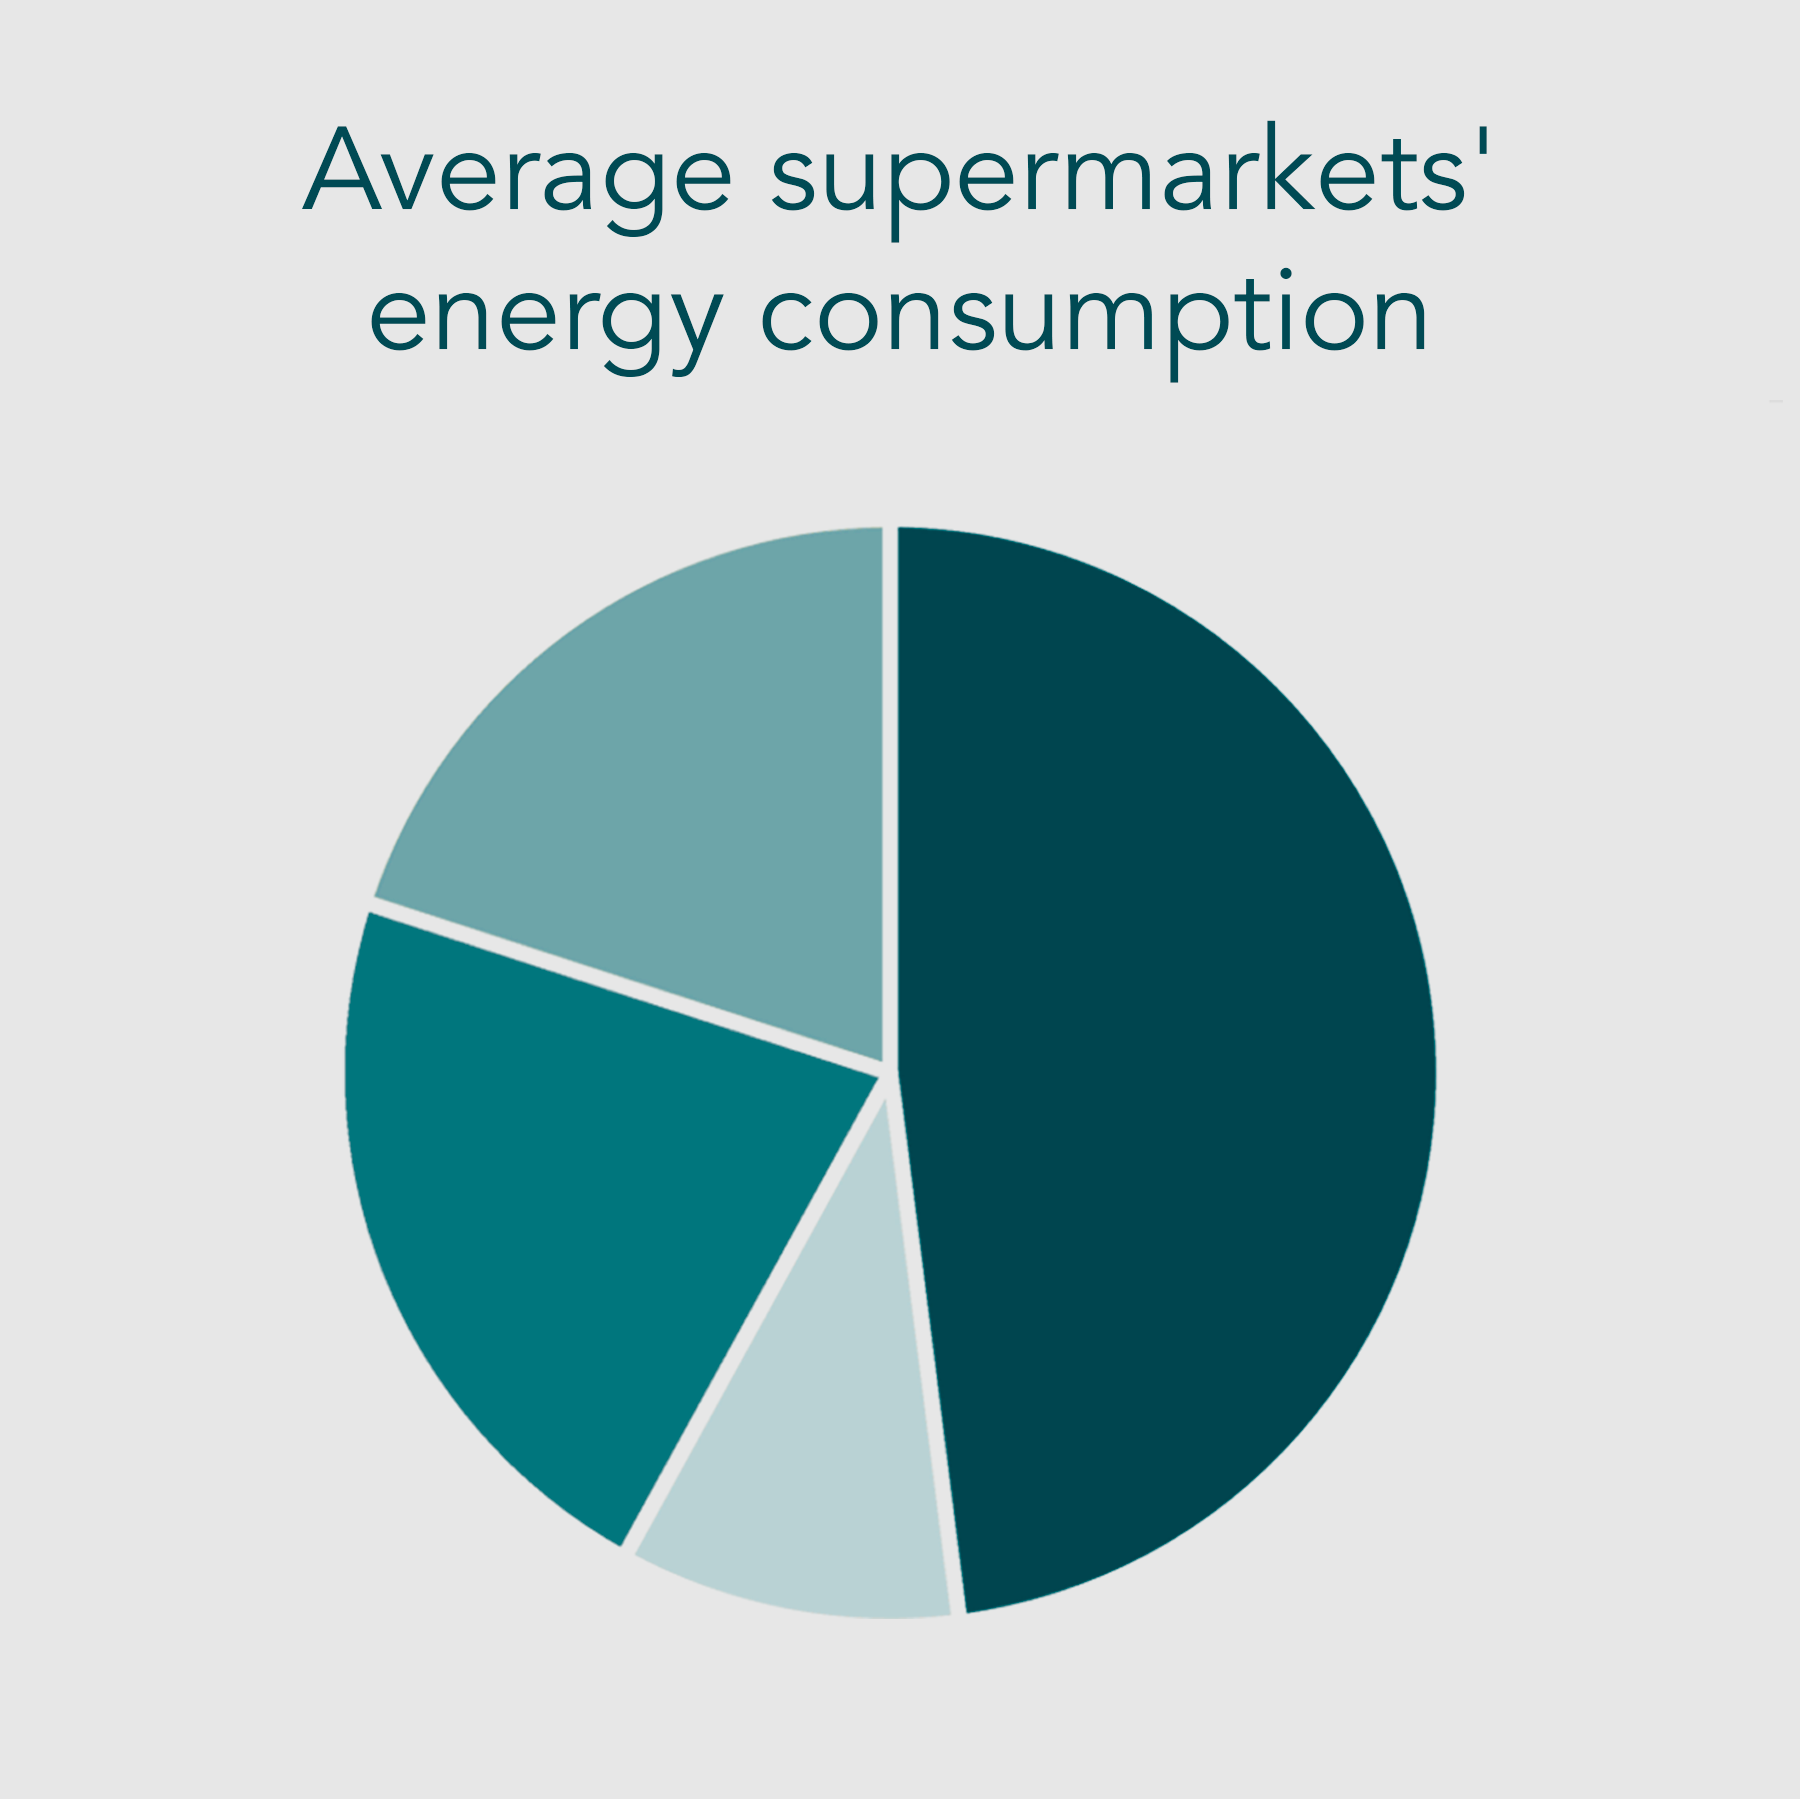 Vizualas_supermarket energy usage pie chart_thmb